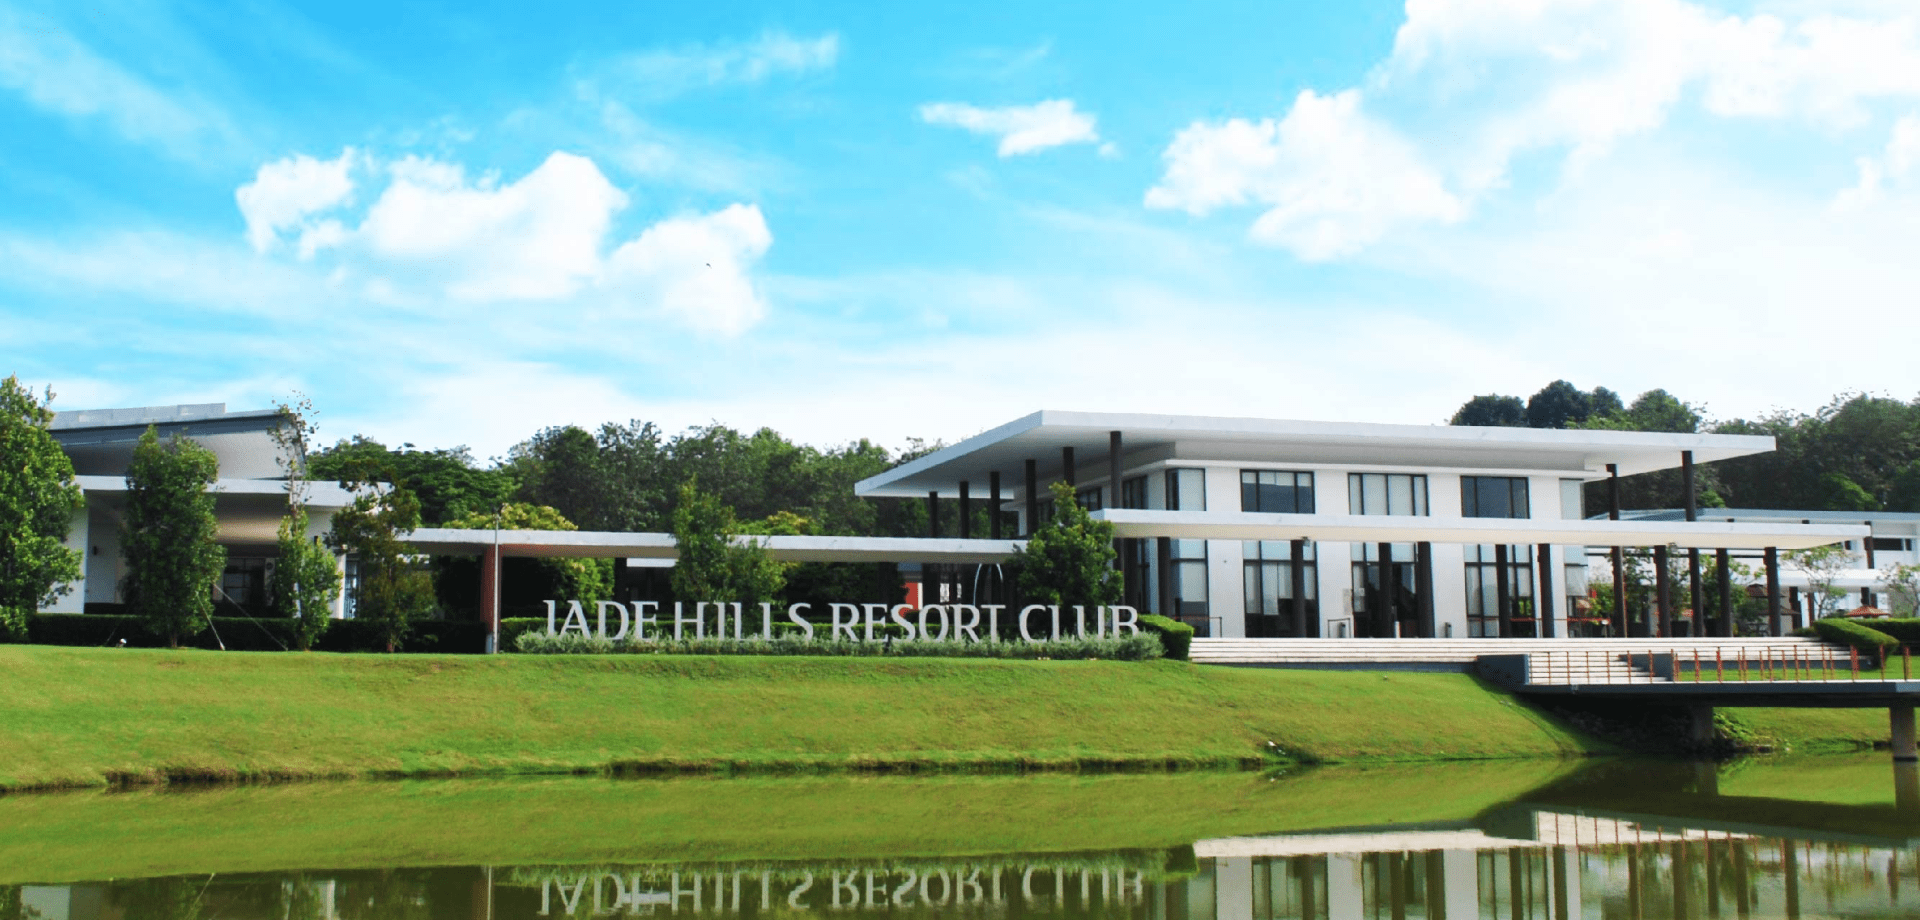 Jade Hills Resort Club